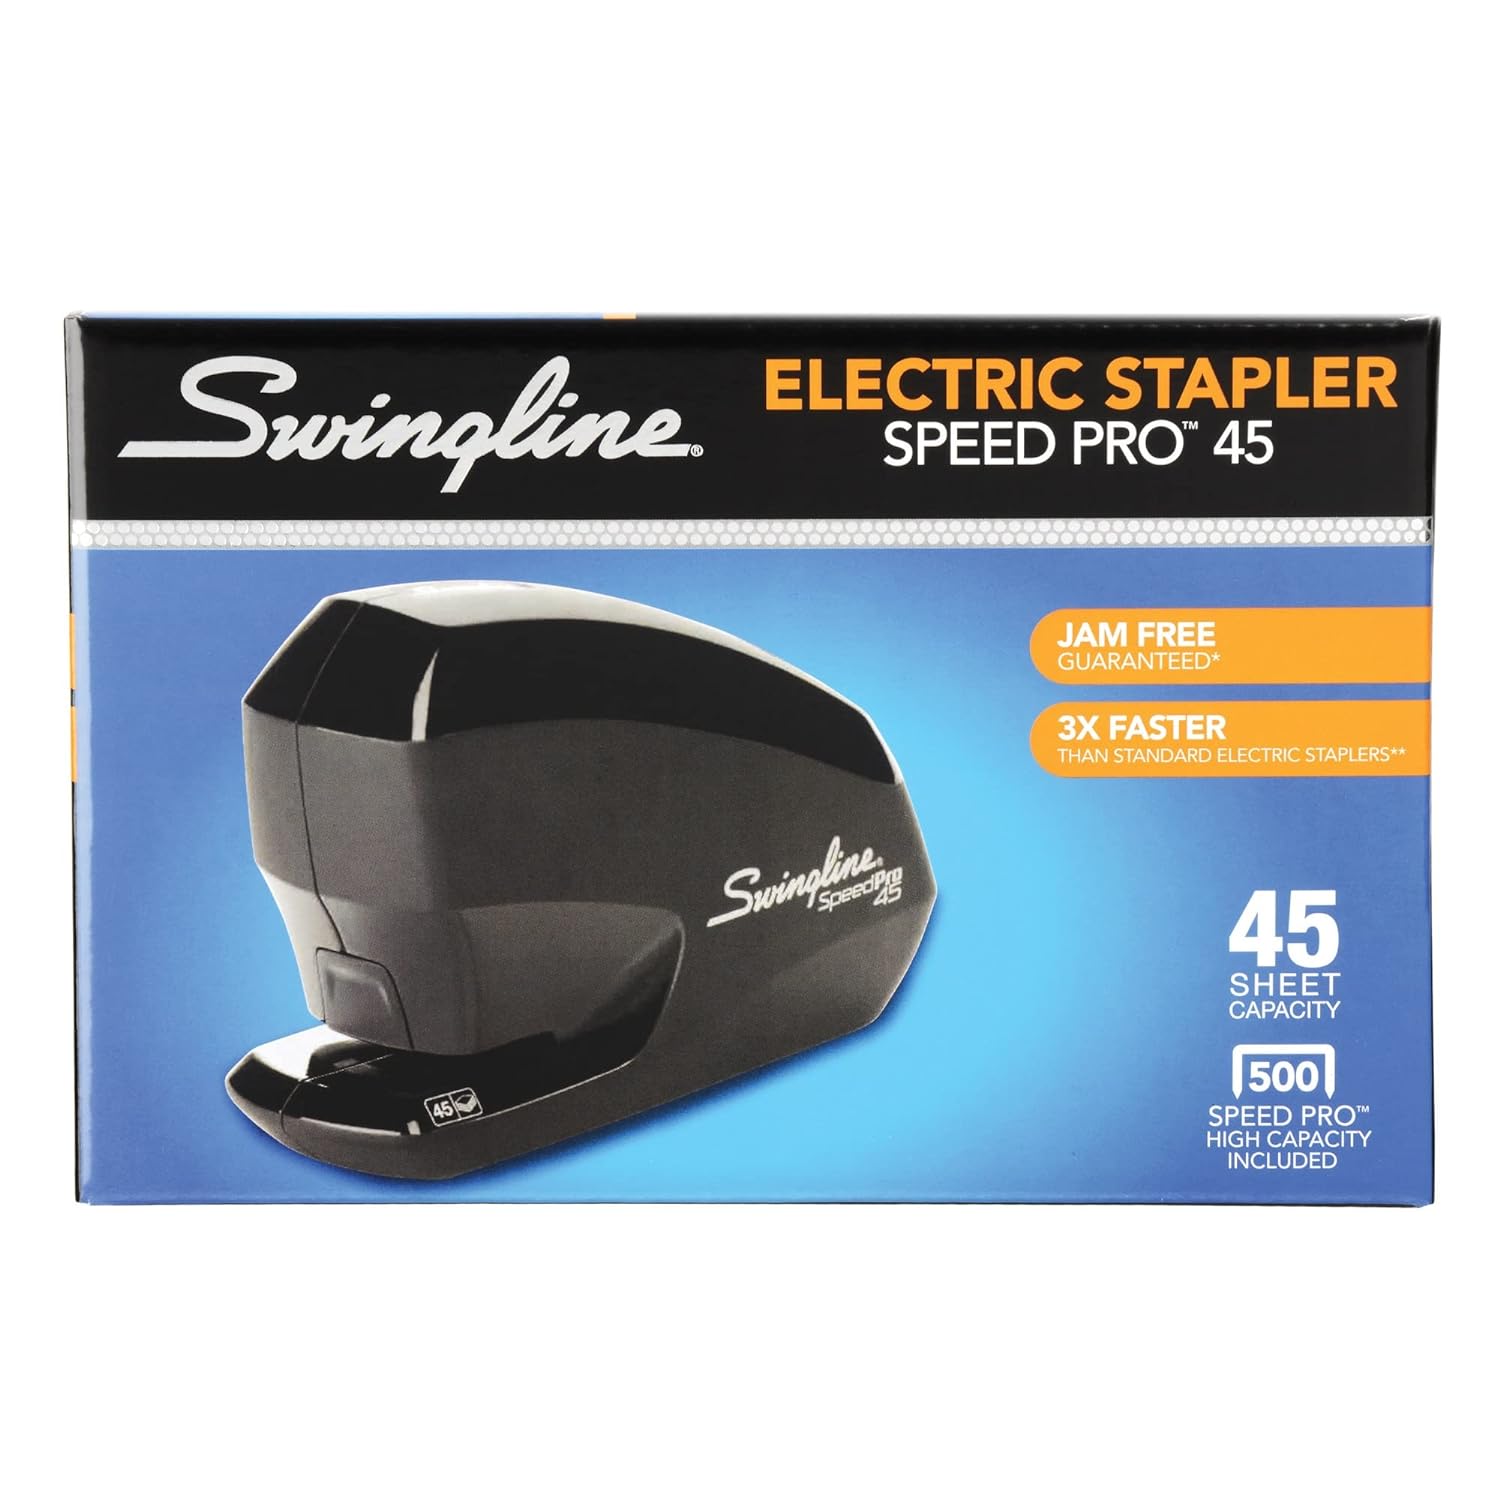 Swingline Electric Stapler, 45 Sheets, Speed Pro 45, Black (S7042155)